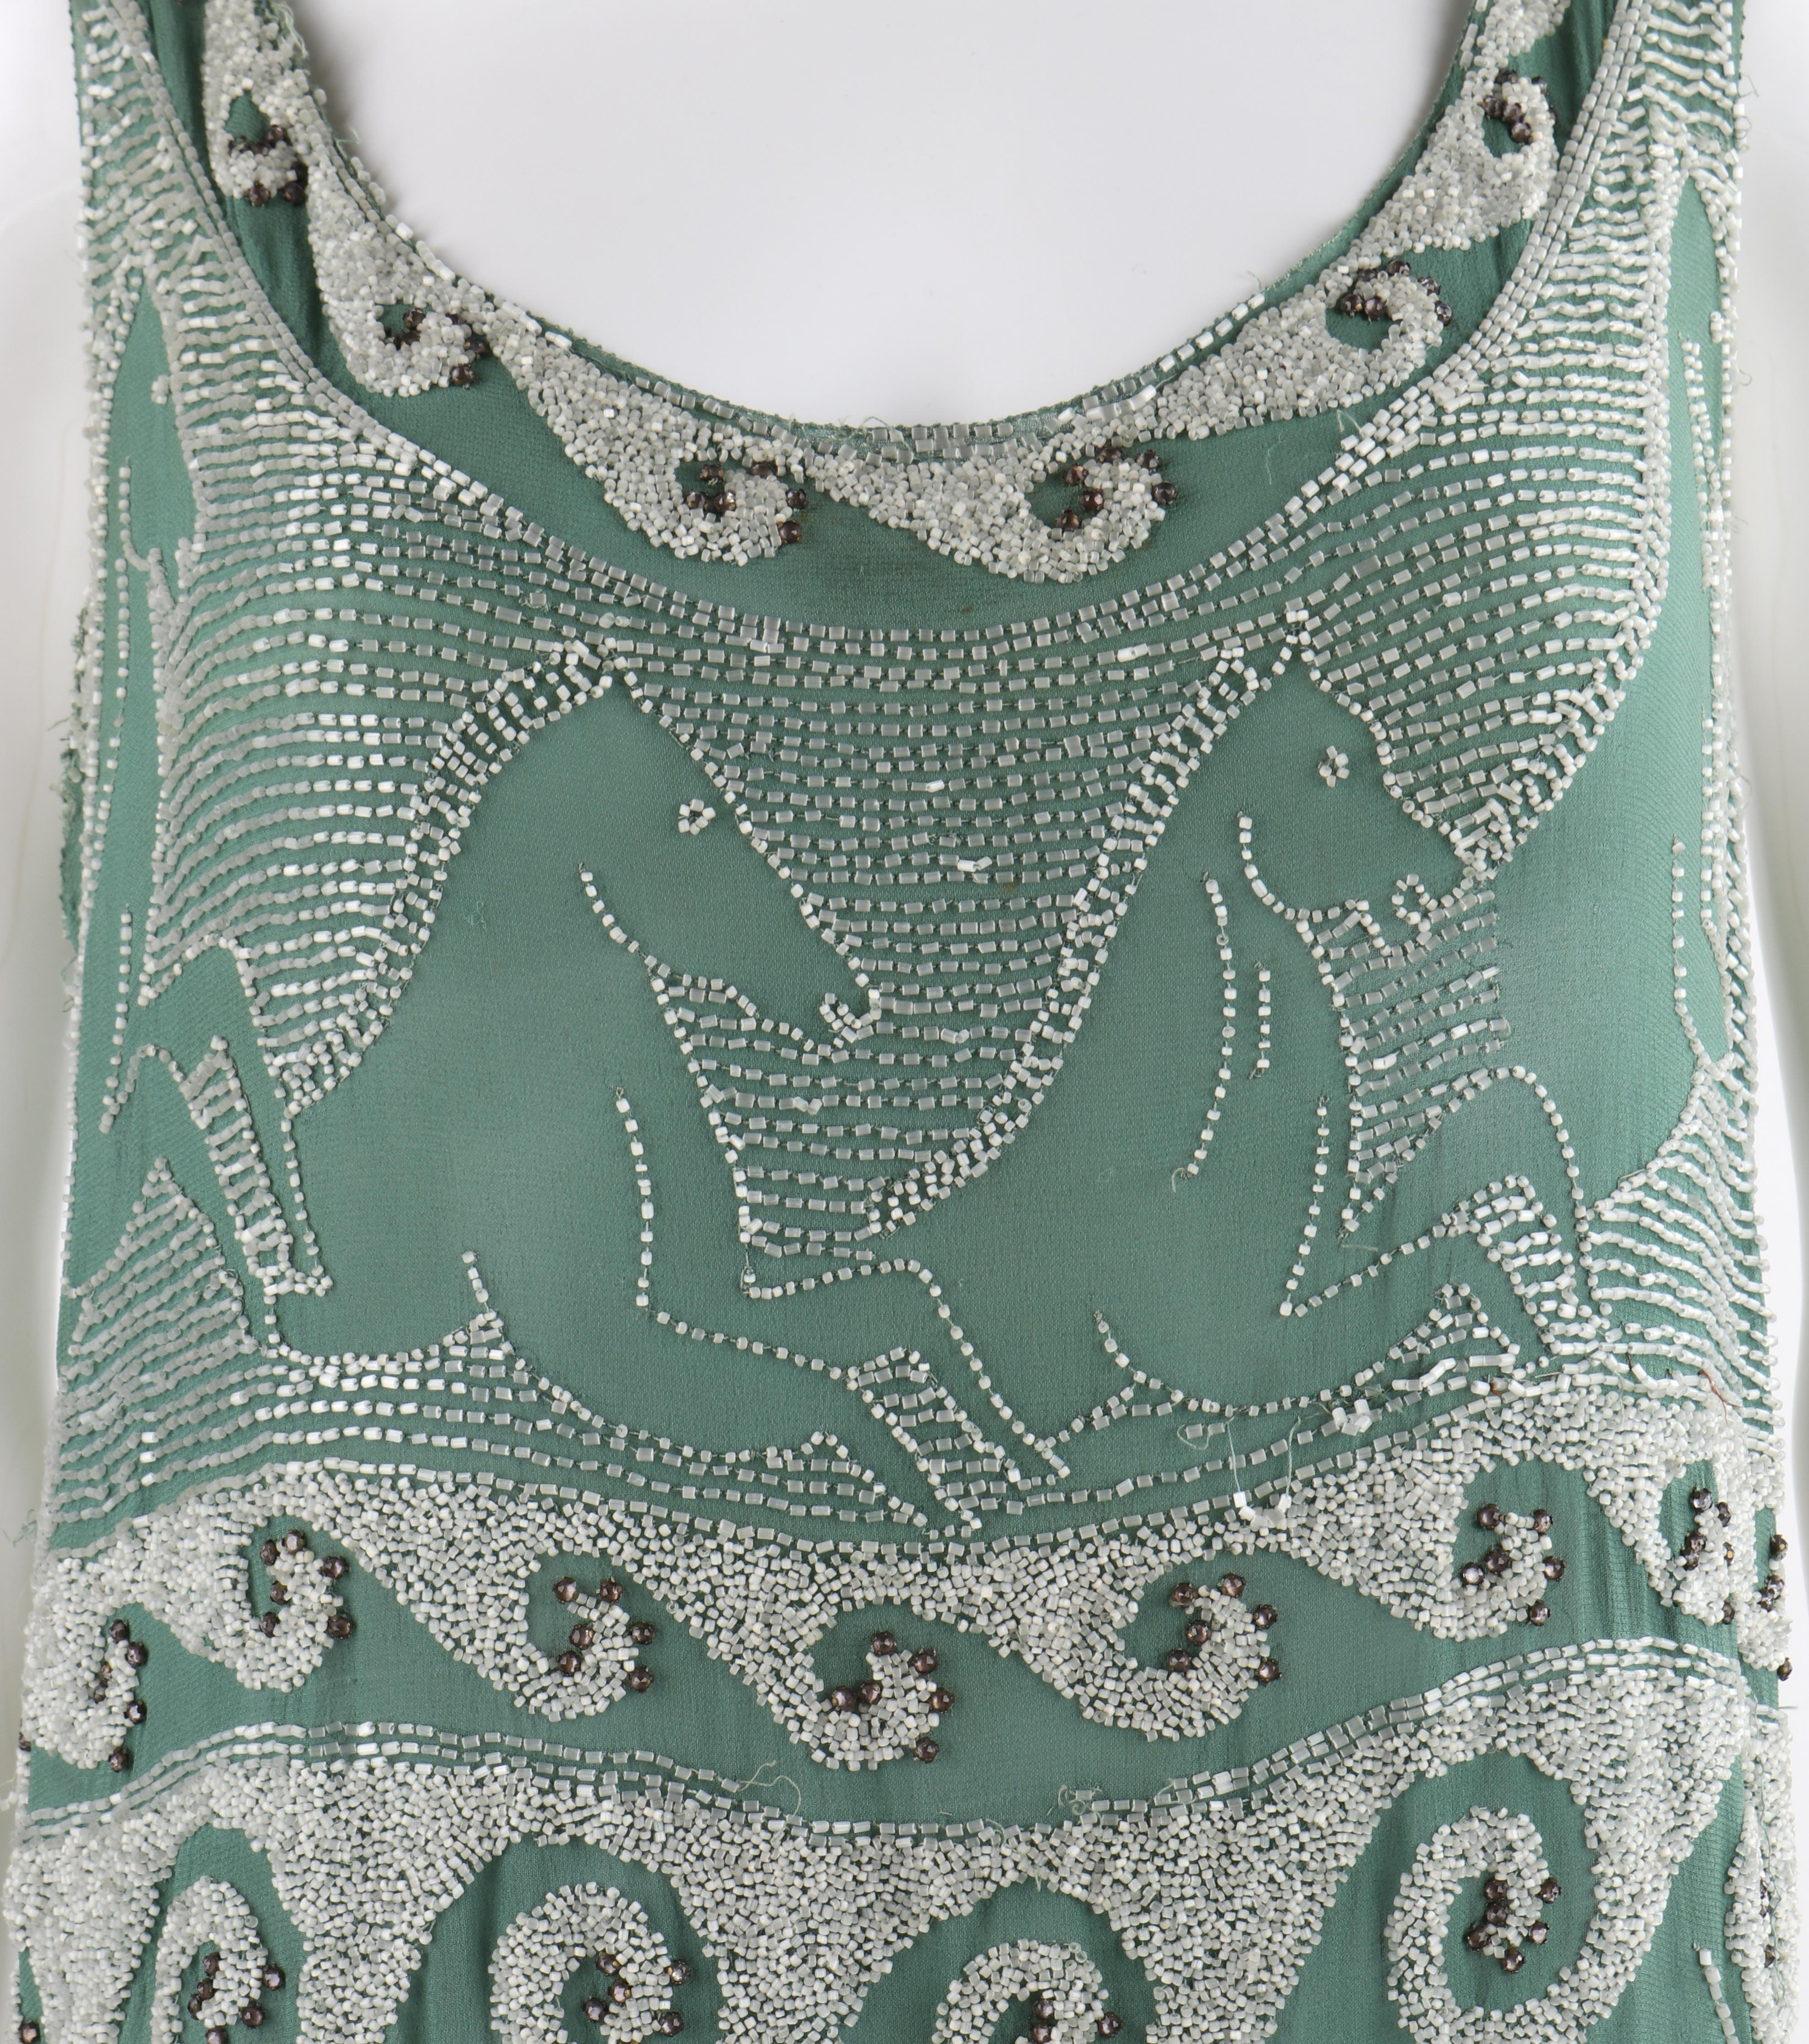 Gris MADELEINE VIONNET - Robe de soirée vert tendre « Little Horses » en perles de verre, v. 1924 en vente